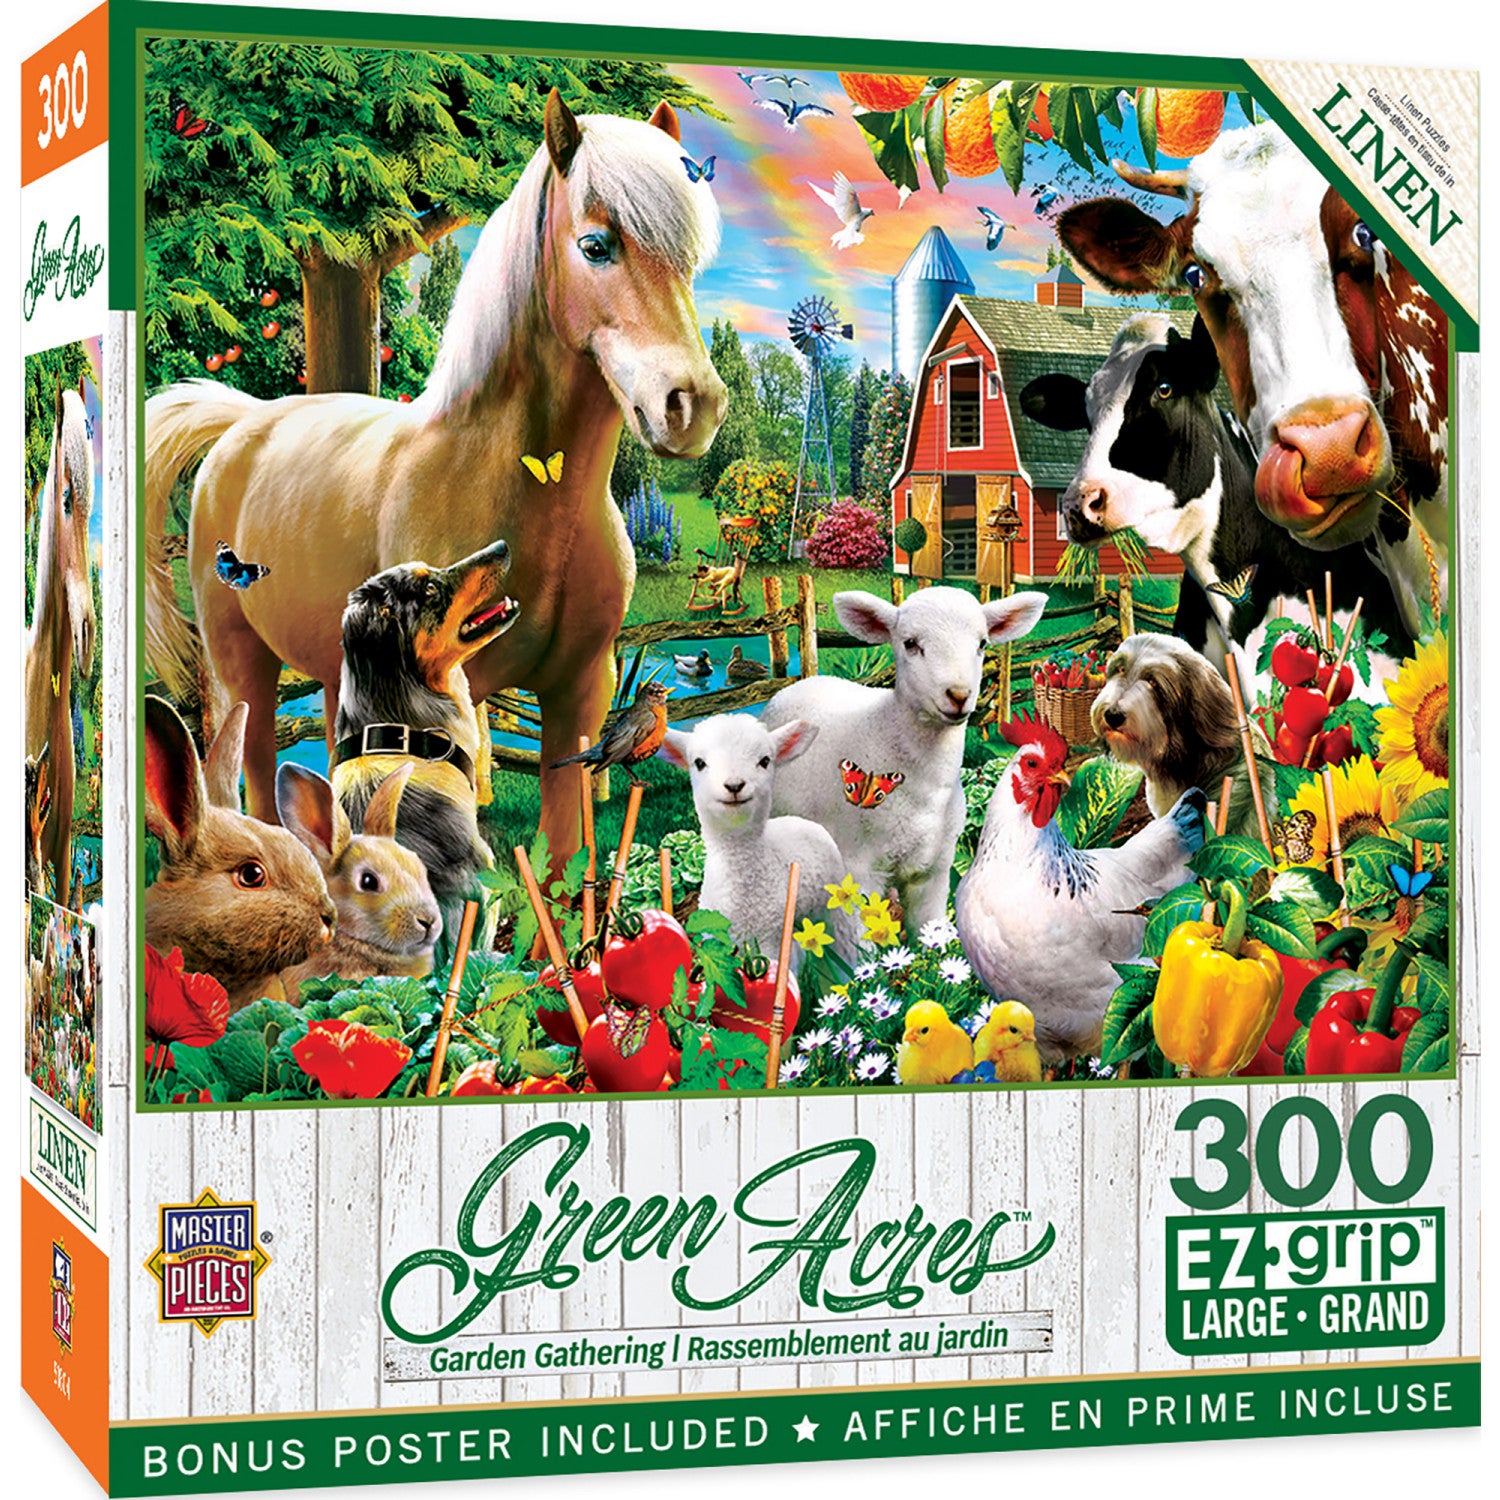 Green Acres - Garden Gathering 300 Piece EZ Grip Puzzle